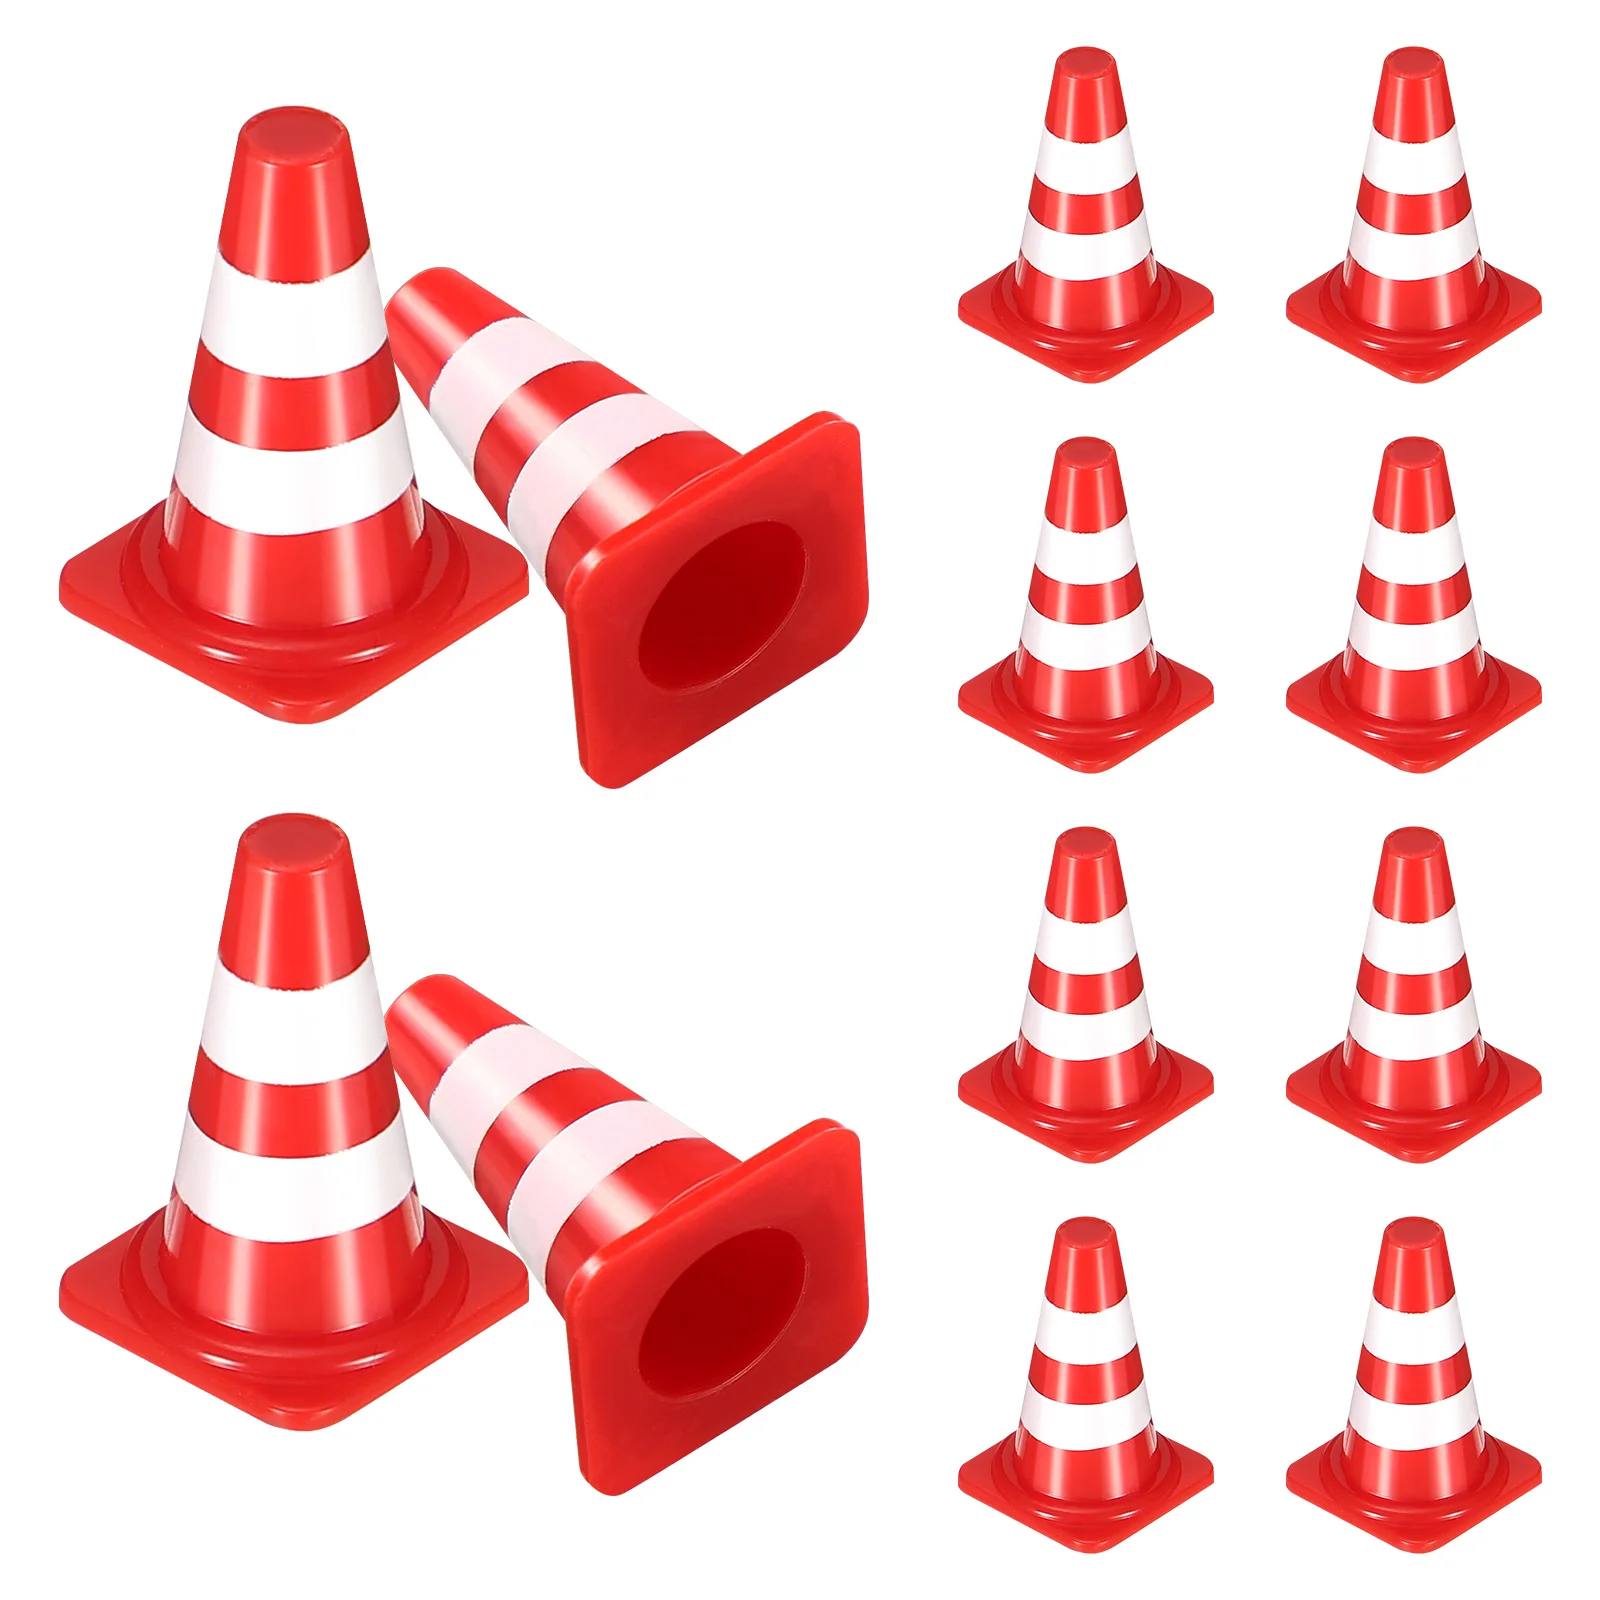 

50 Pcs Roadblock Simulation Props Mini Safety Cones Toys Childrens Miniature Traffic Children’s Parking